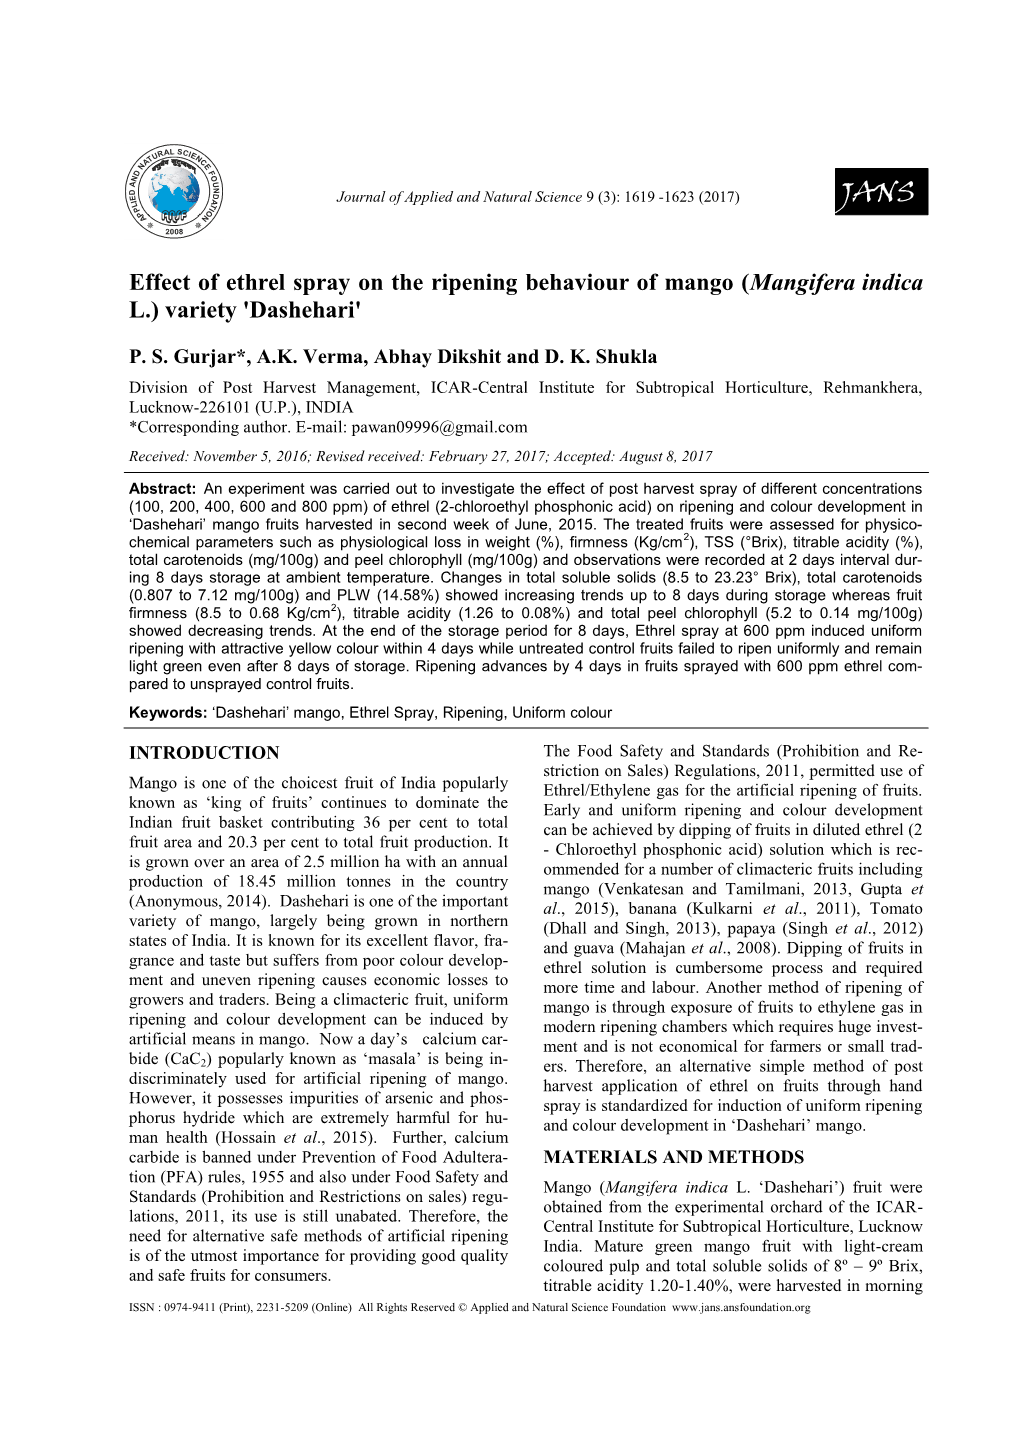 Effect of Ethrel Spray on the Ripening Behaviour of Mango (Mangifera Indica L.) Variety 'Dashehari'